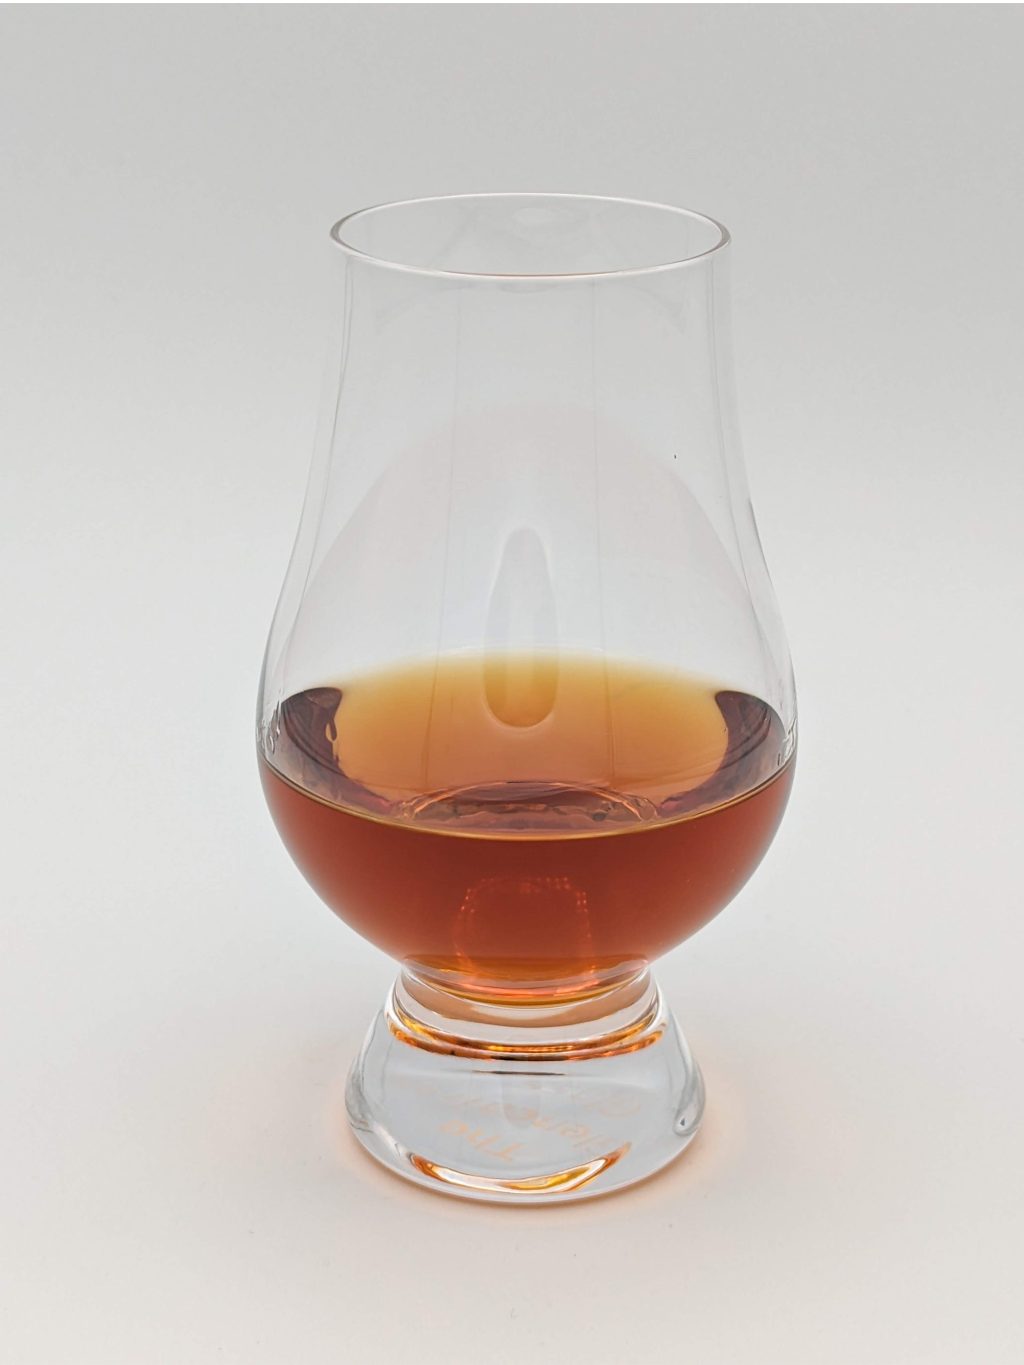 Dark amber liquid in a glen cairn glass